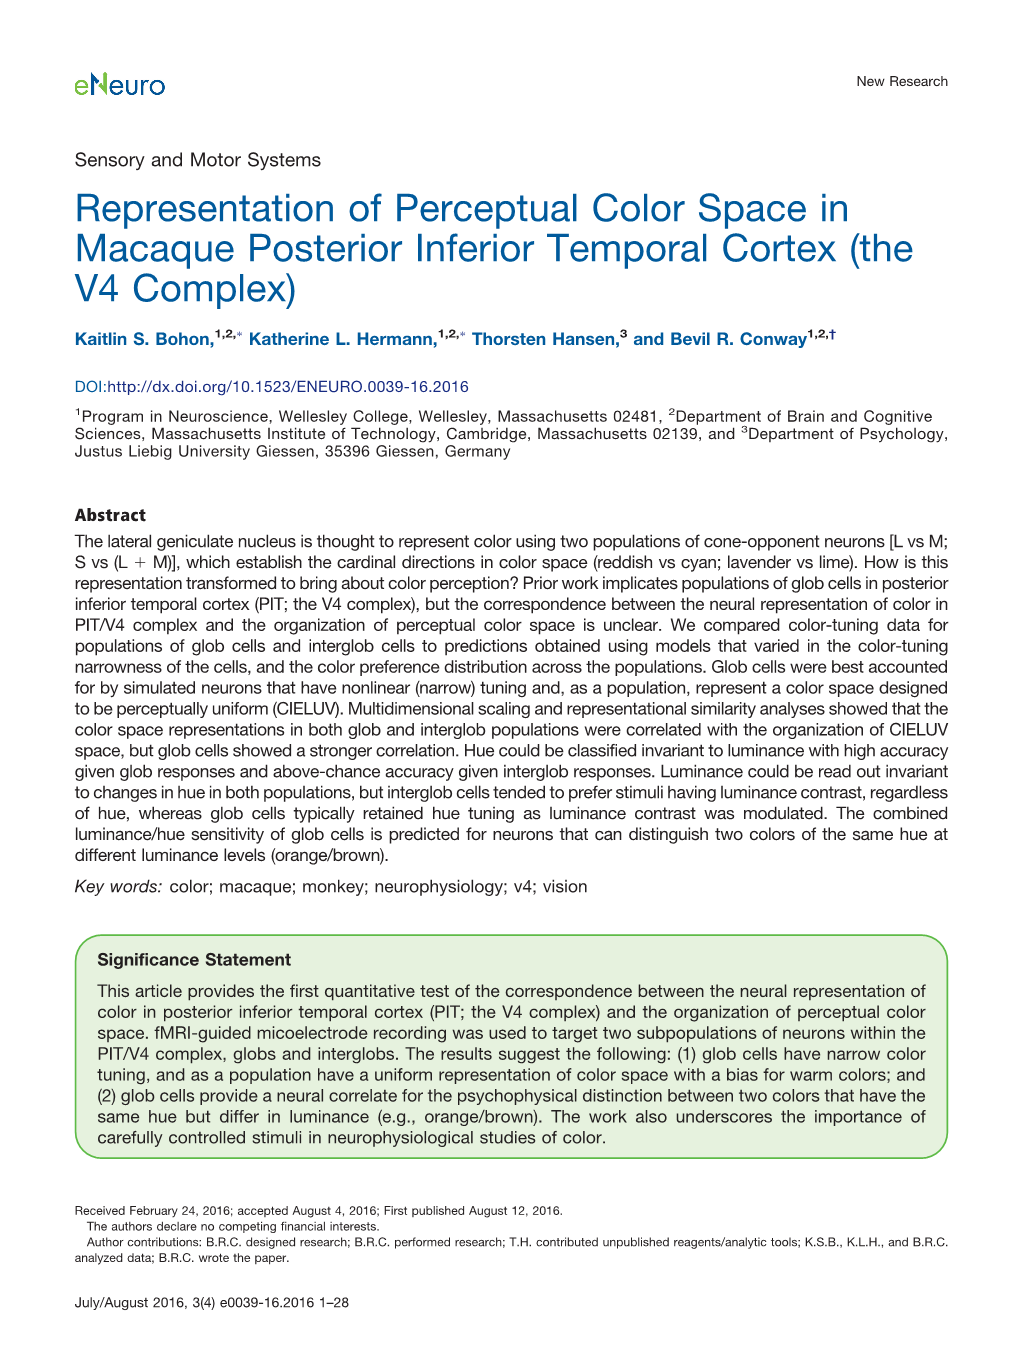 Representation of Perceptual Color Space in Macaque Posterior Inferior Temporal Cortex (The V4 Complex)